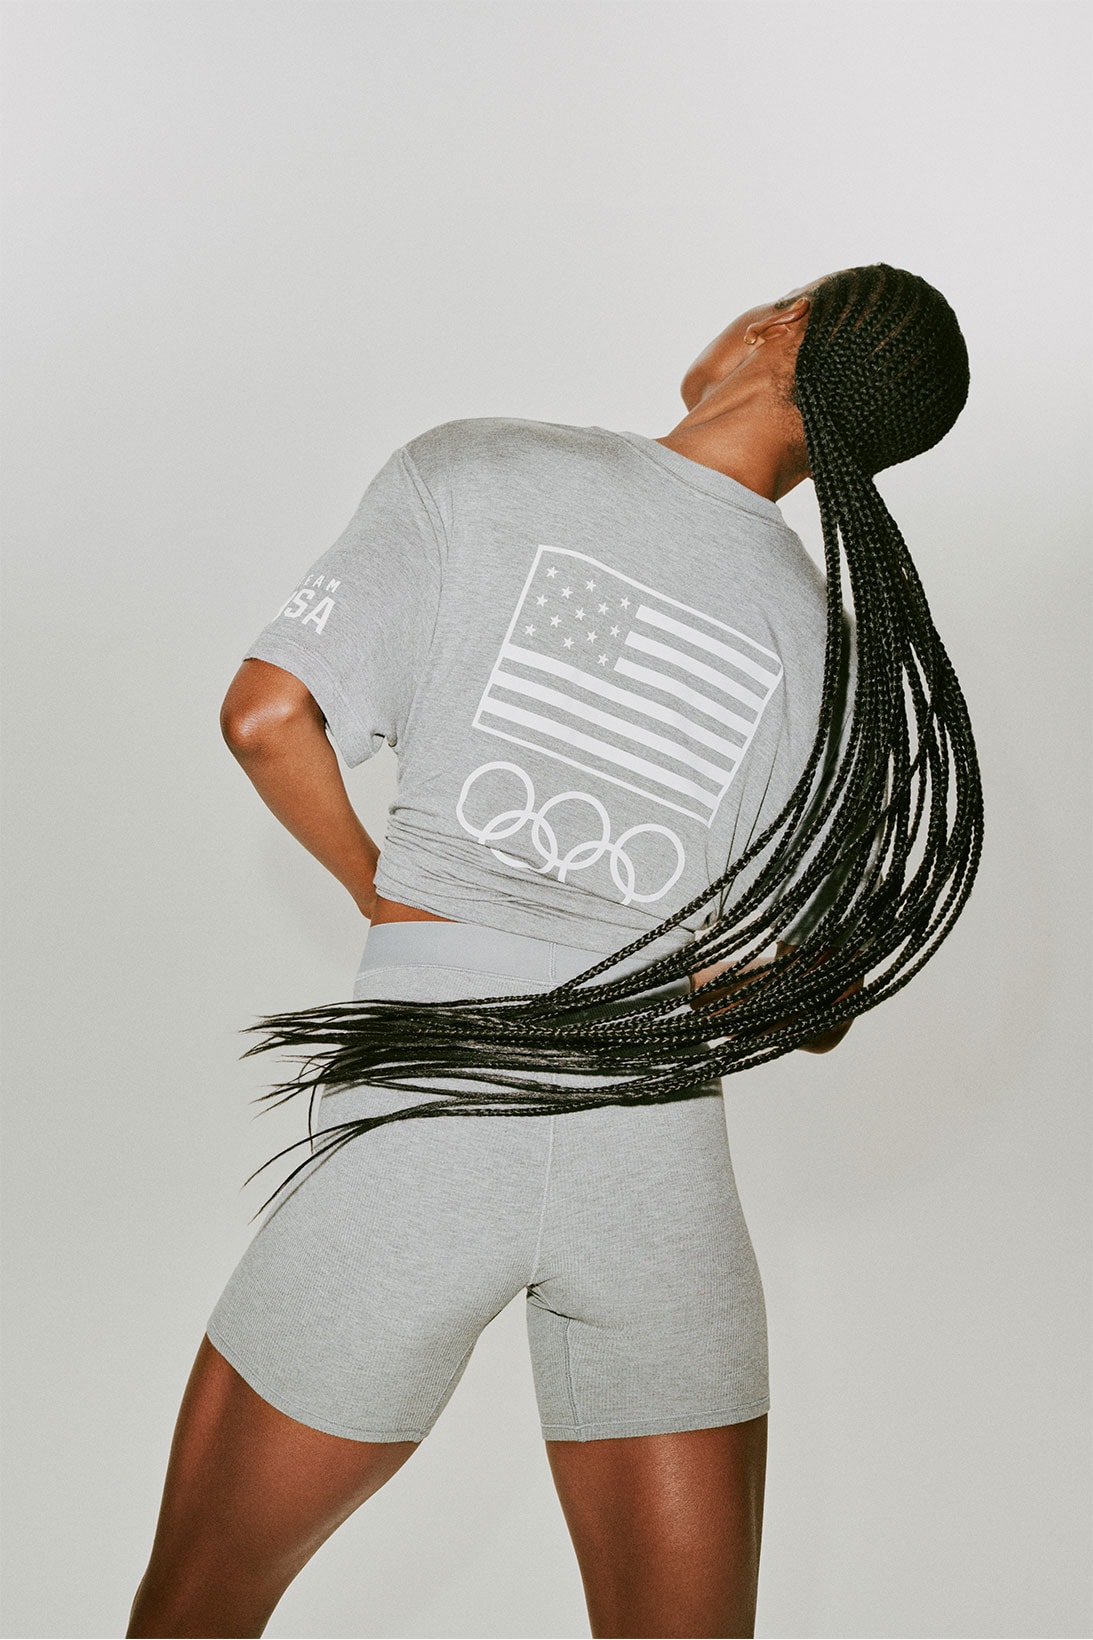 SKIMS Kim Kardashian Team USA 2020 Tokyo Olympics Paralympics Official Underwear Brand Dalilah Muhammad T-shirt